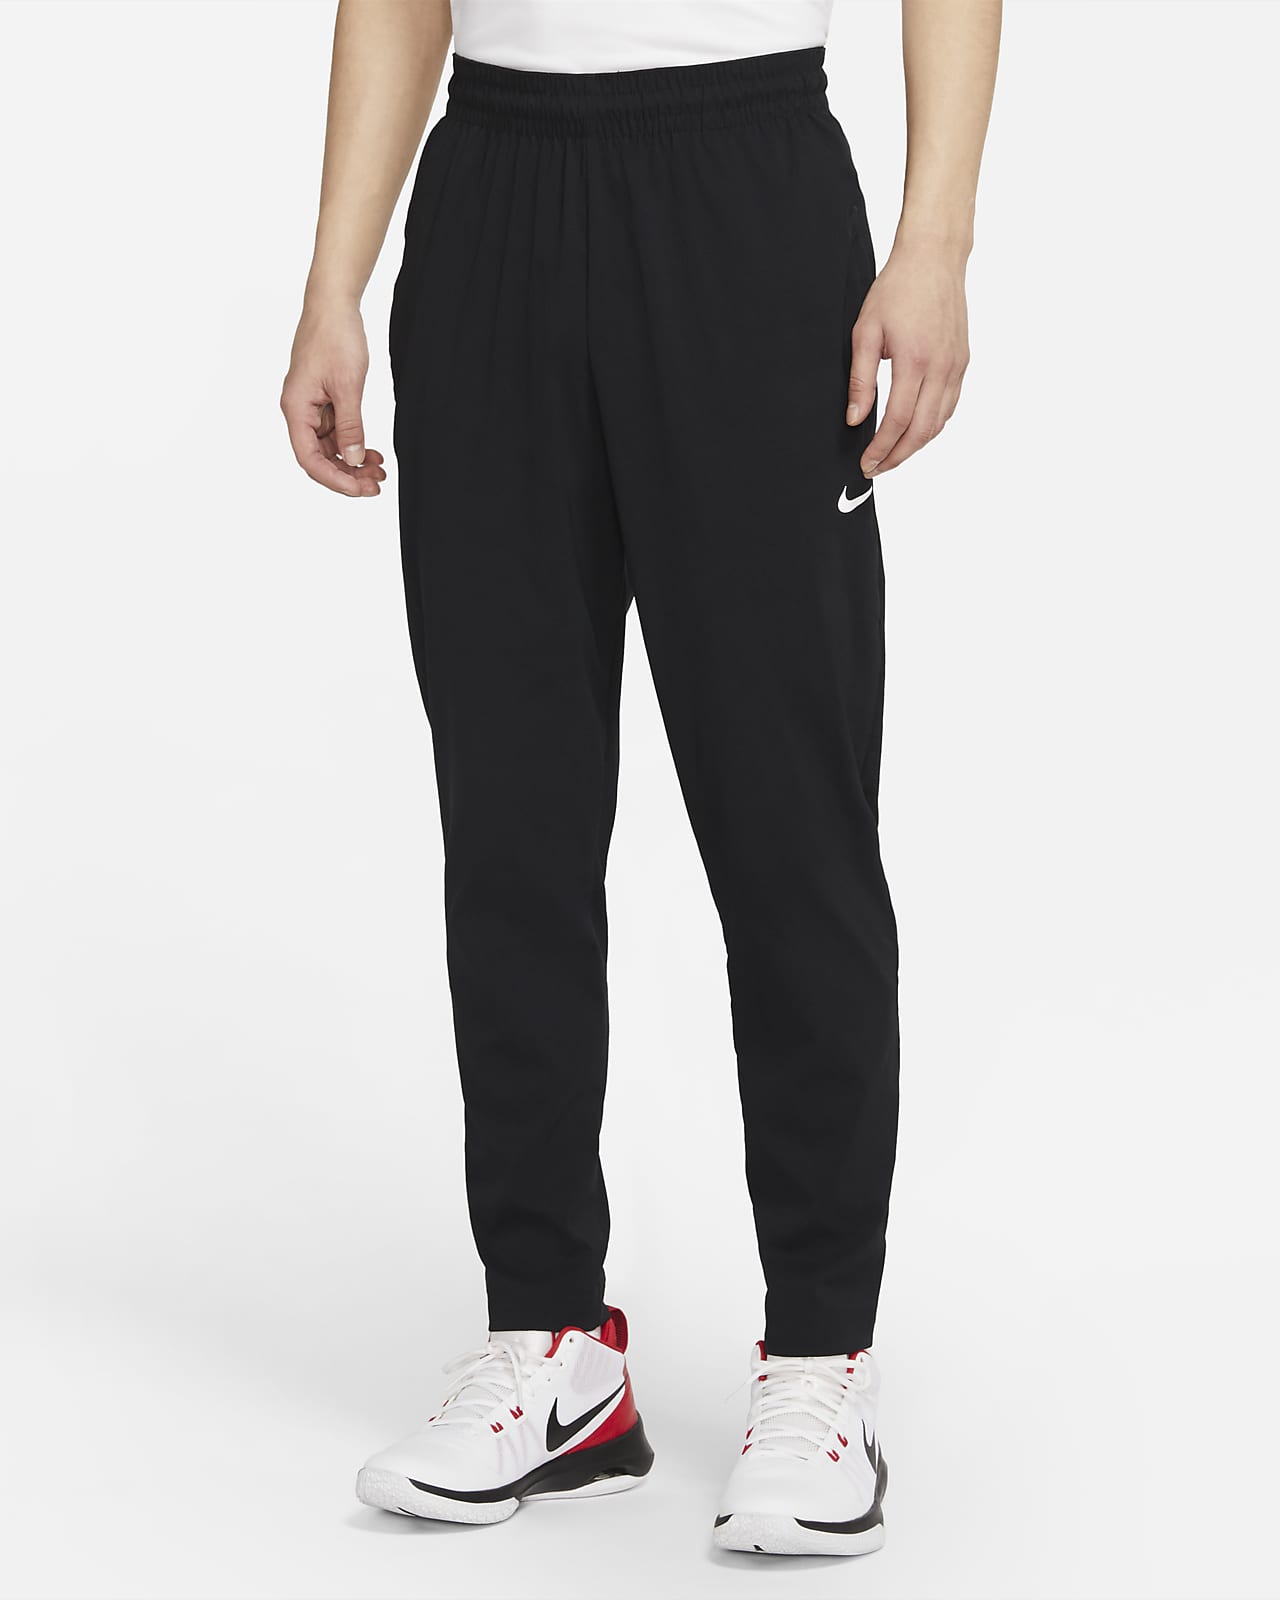 Nike Men's Woven Basketball Trousers. Nike LU